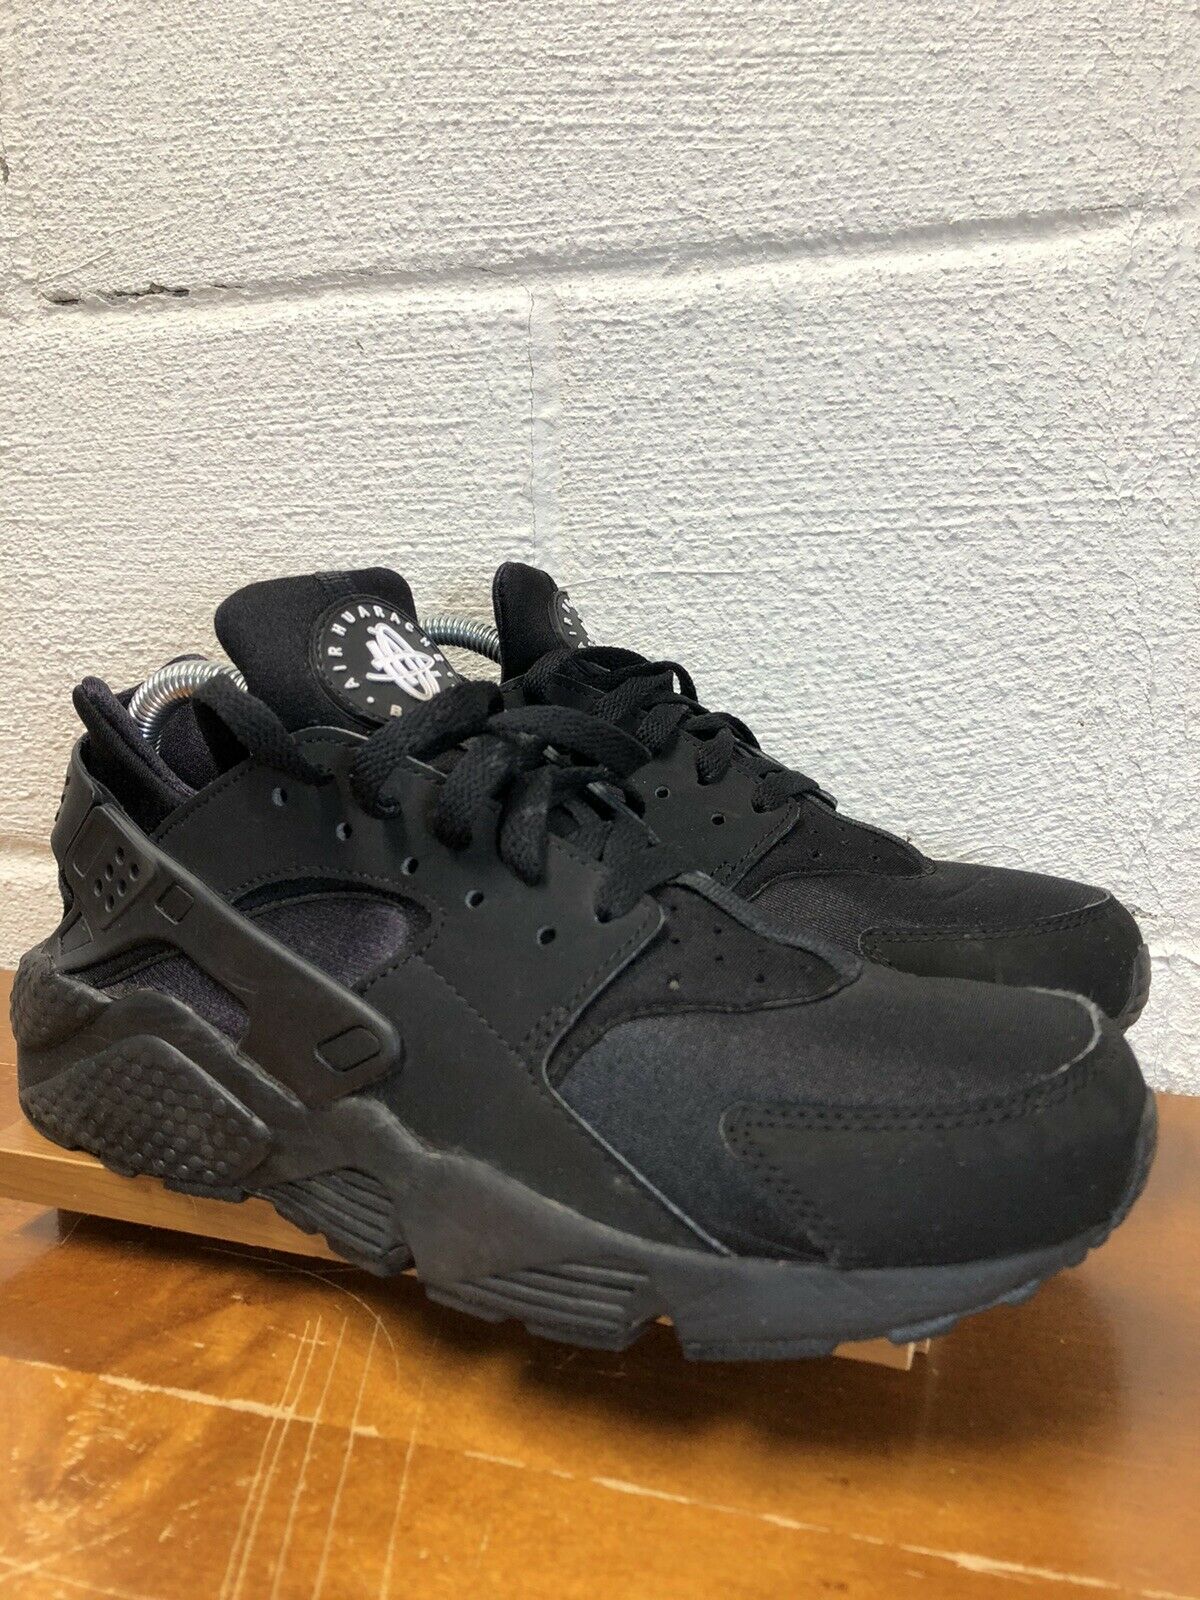 Nike Air Huarache Triple Black Shoes 318429-003 Men’s Size 9